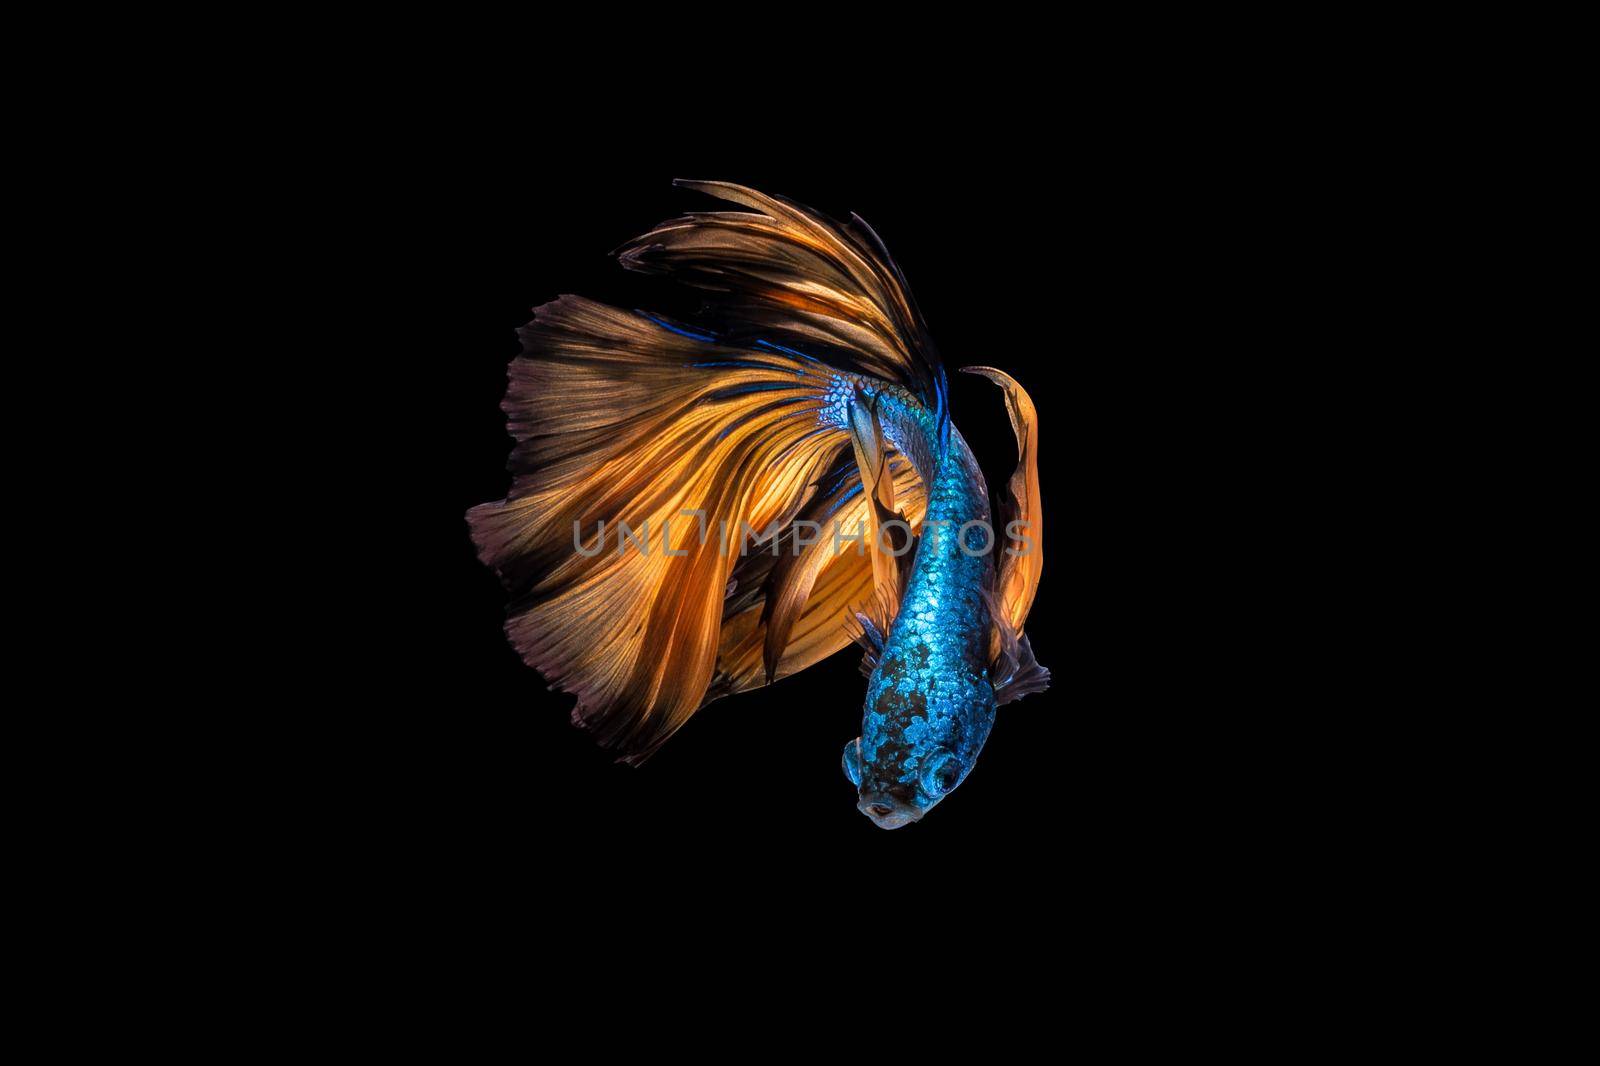 Colourful Betta fish,Siamese fighting fish in movement on black background. by Nuamfolio